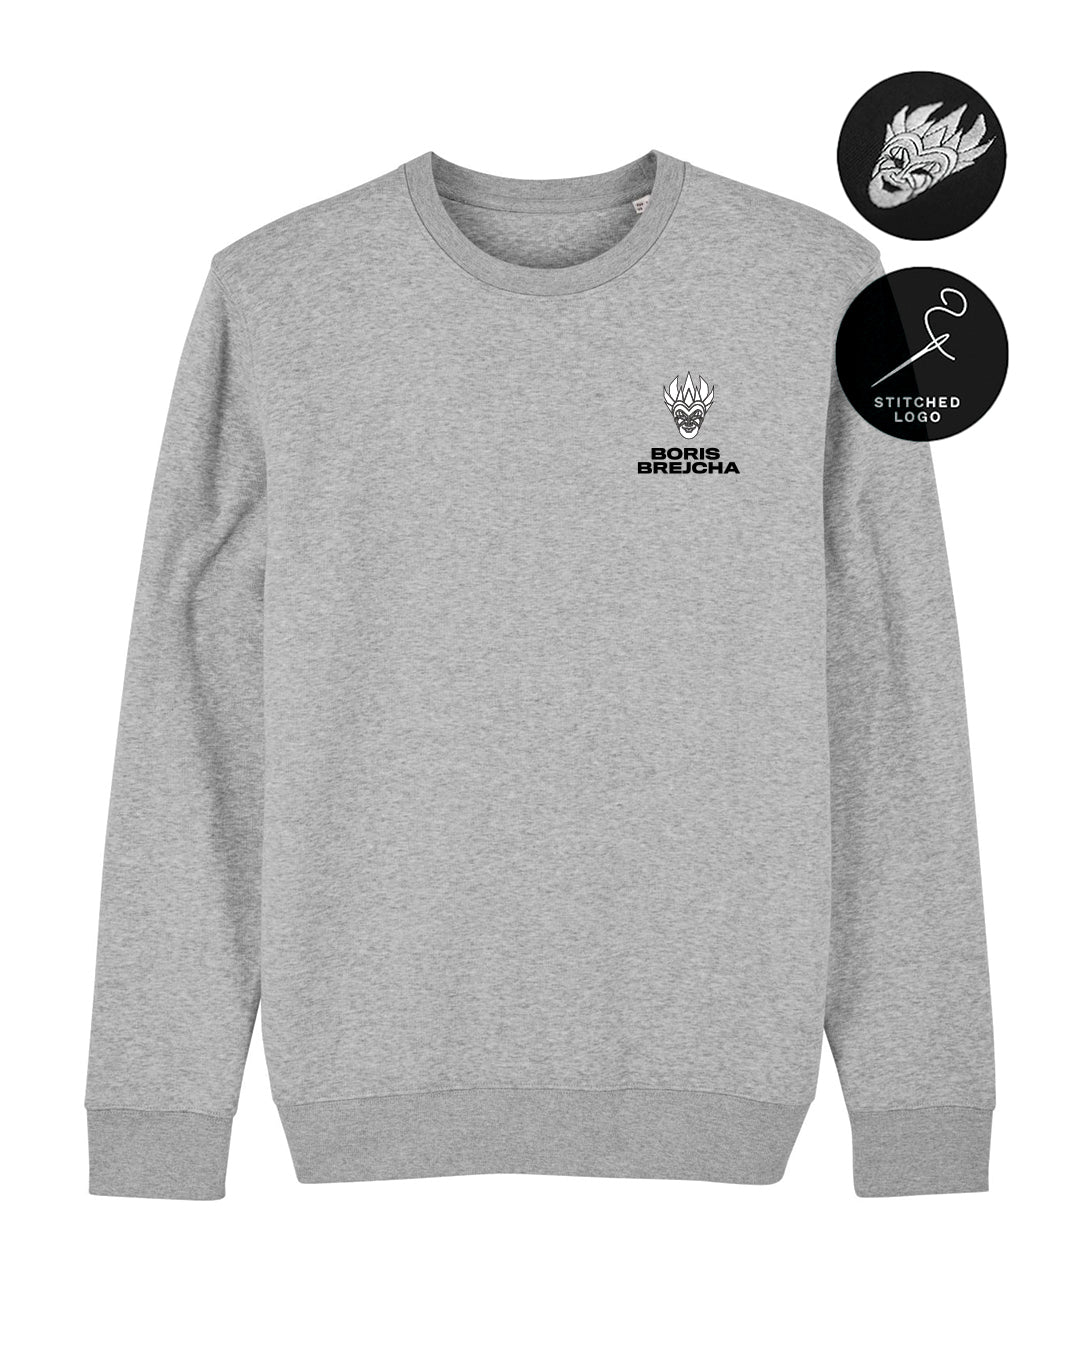 Boris Brejcha - Mini Logo Sweatshirt heather gray (Stitched Logo)